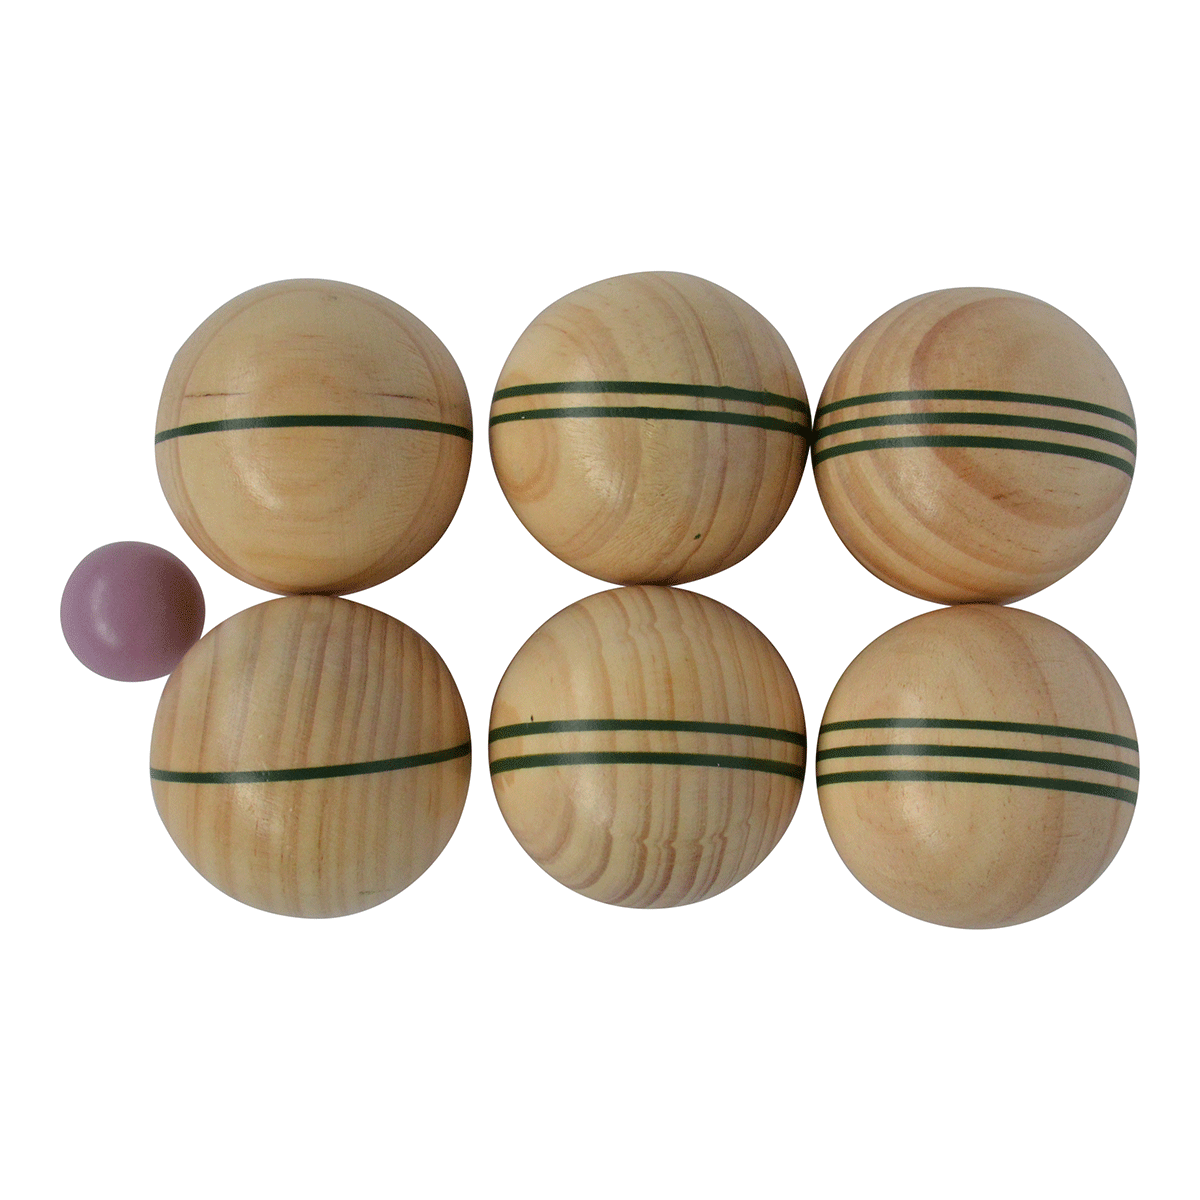 Traditional Garden Games Wooden Boule